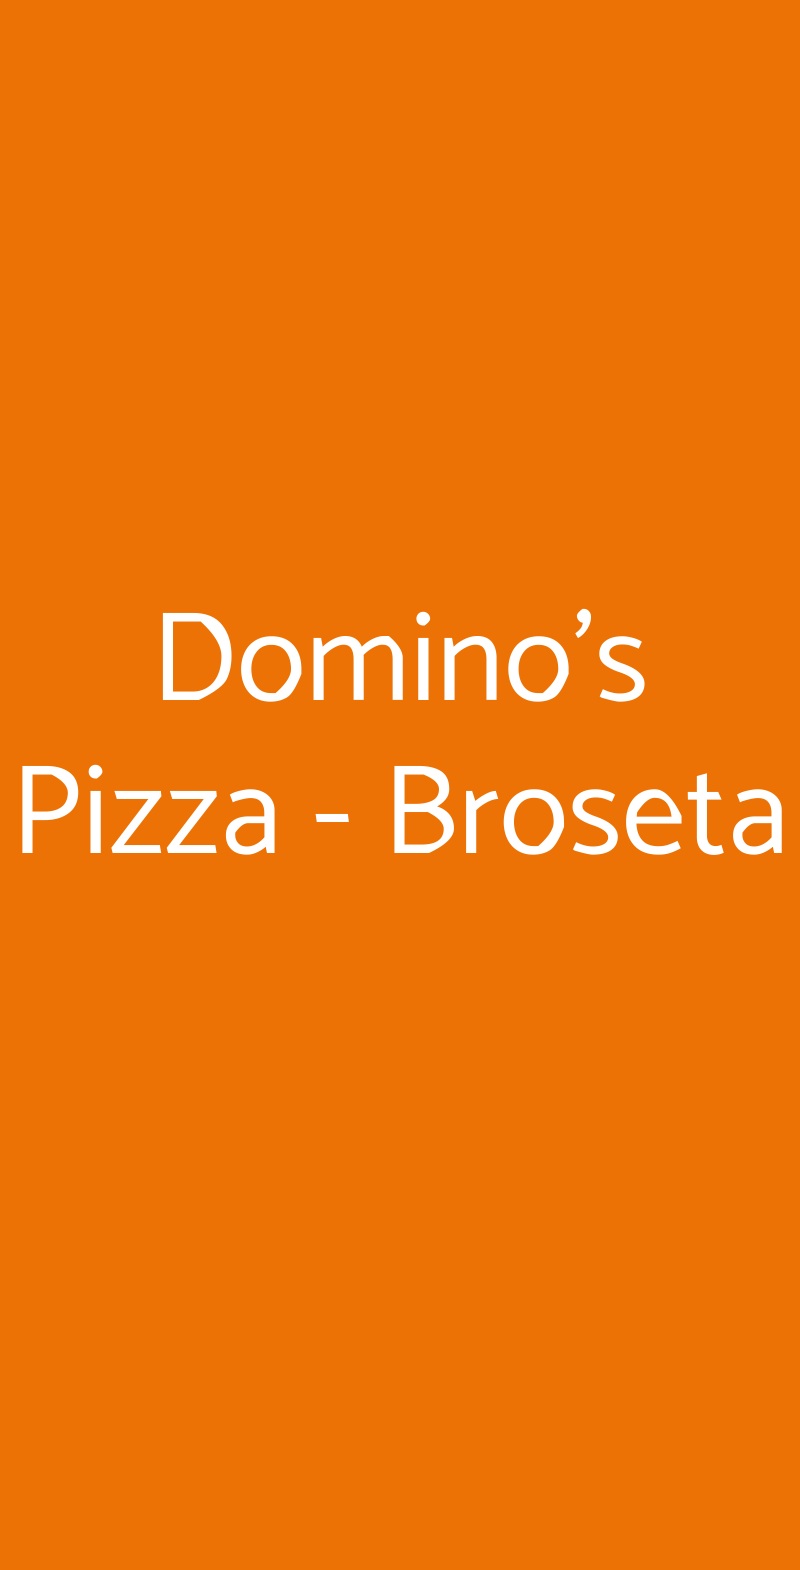 Domino's Pizza - Broseta Bergamo menù 1 pagina